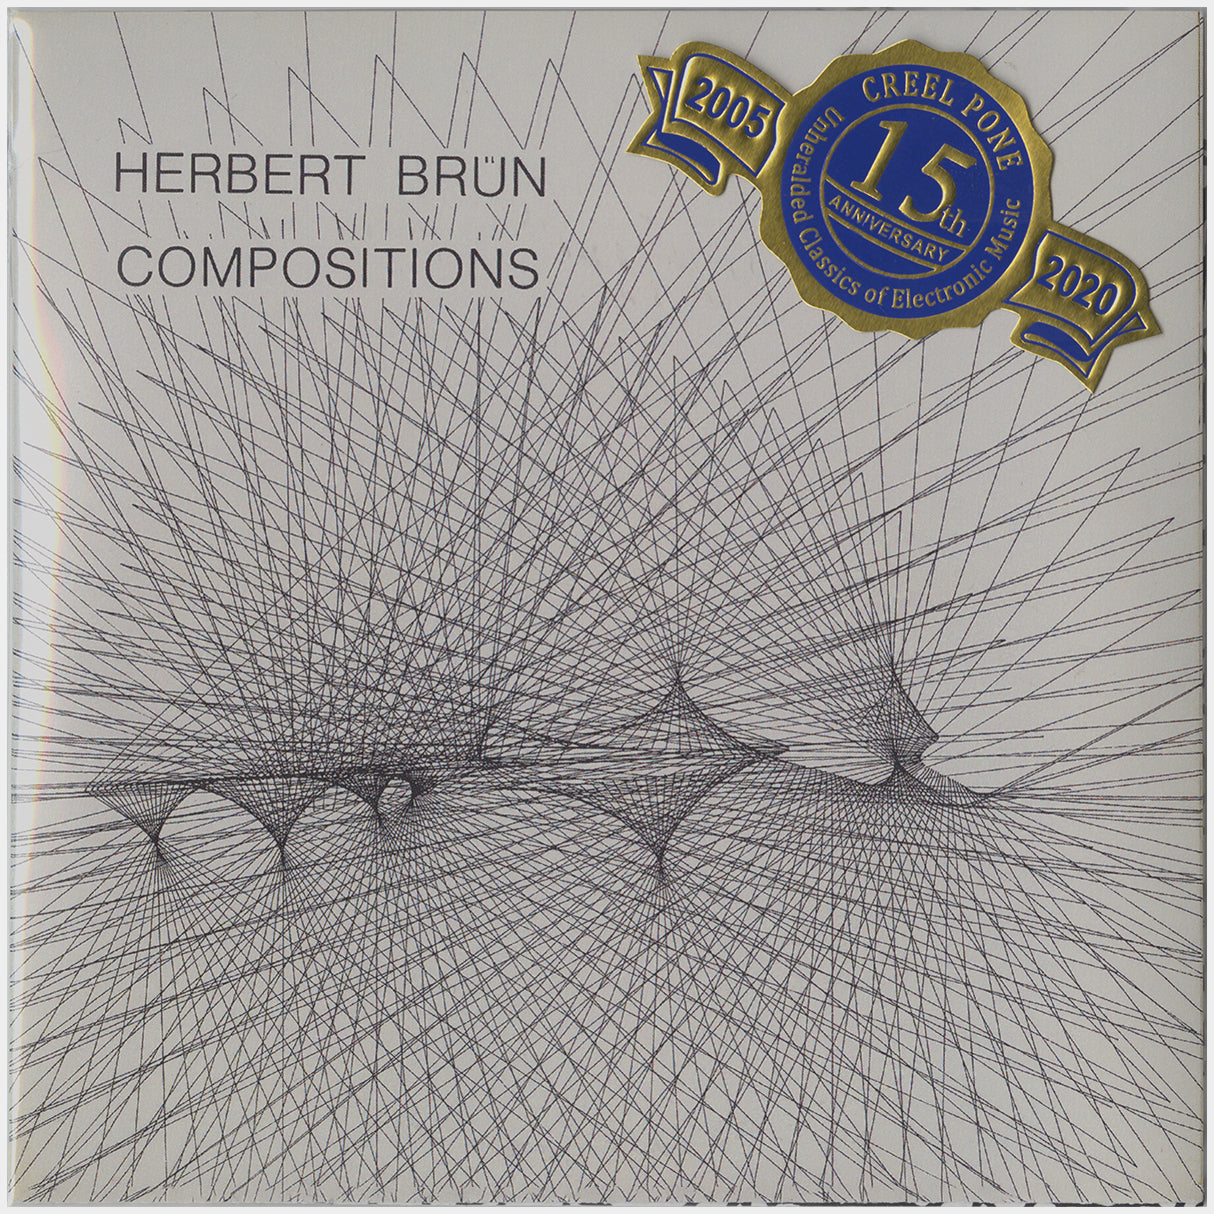 [CP 262 CD] Herbert Brün; Klänge Unterwegs & Anepigraphe, Über Musik & Zum Computer, Compositions +